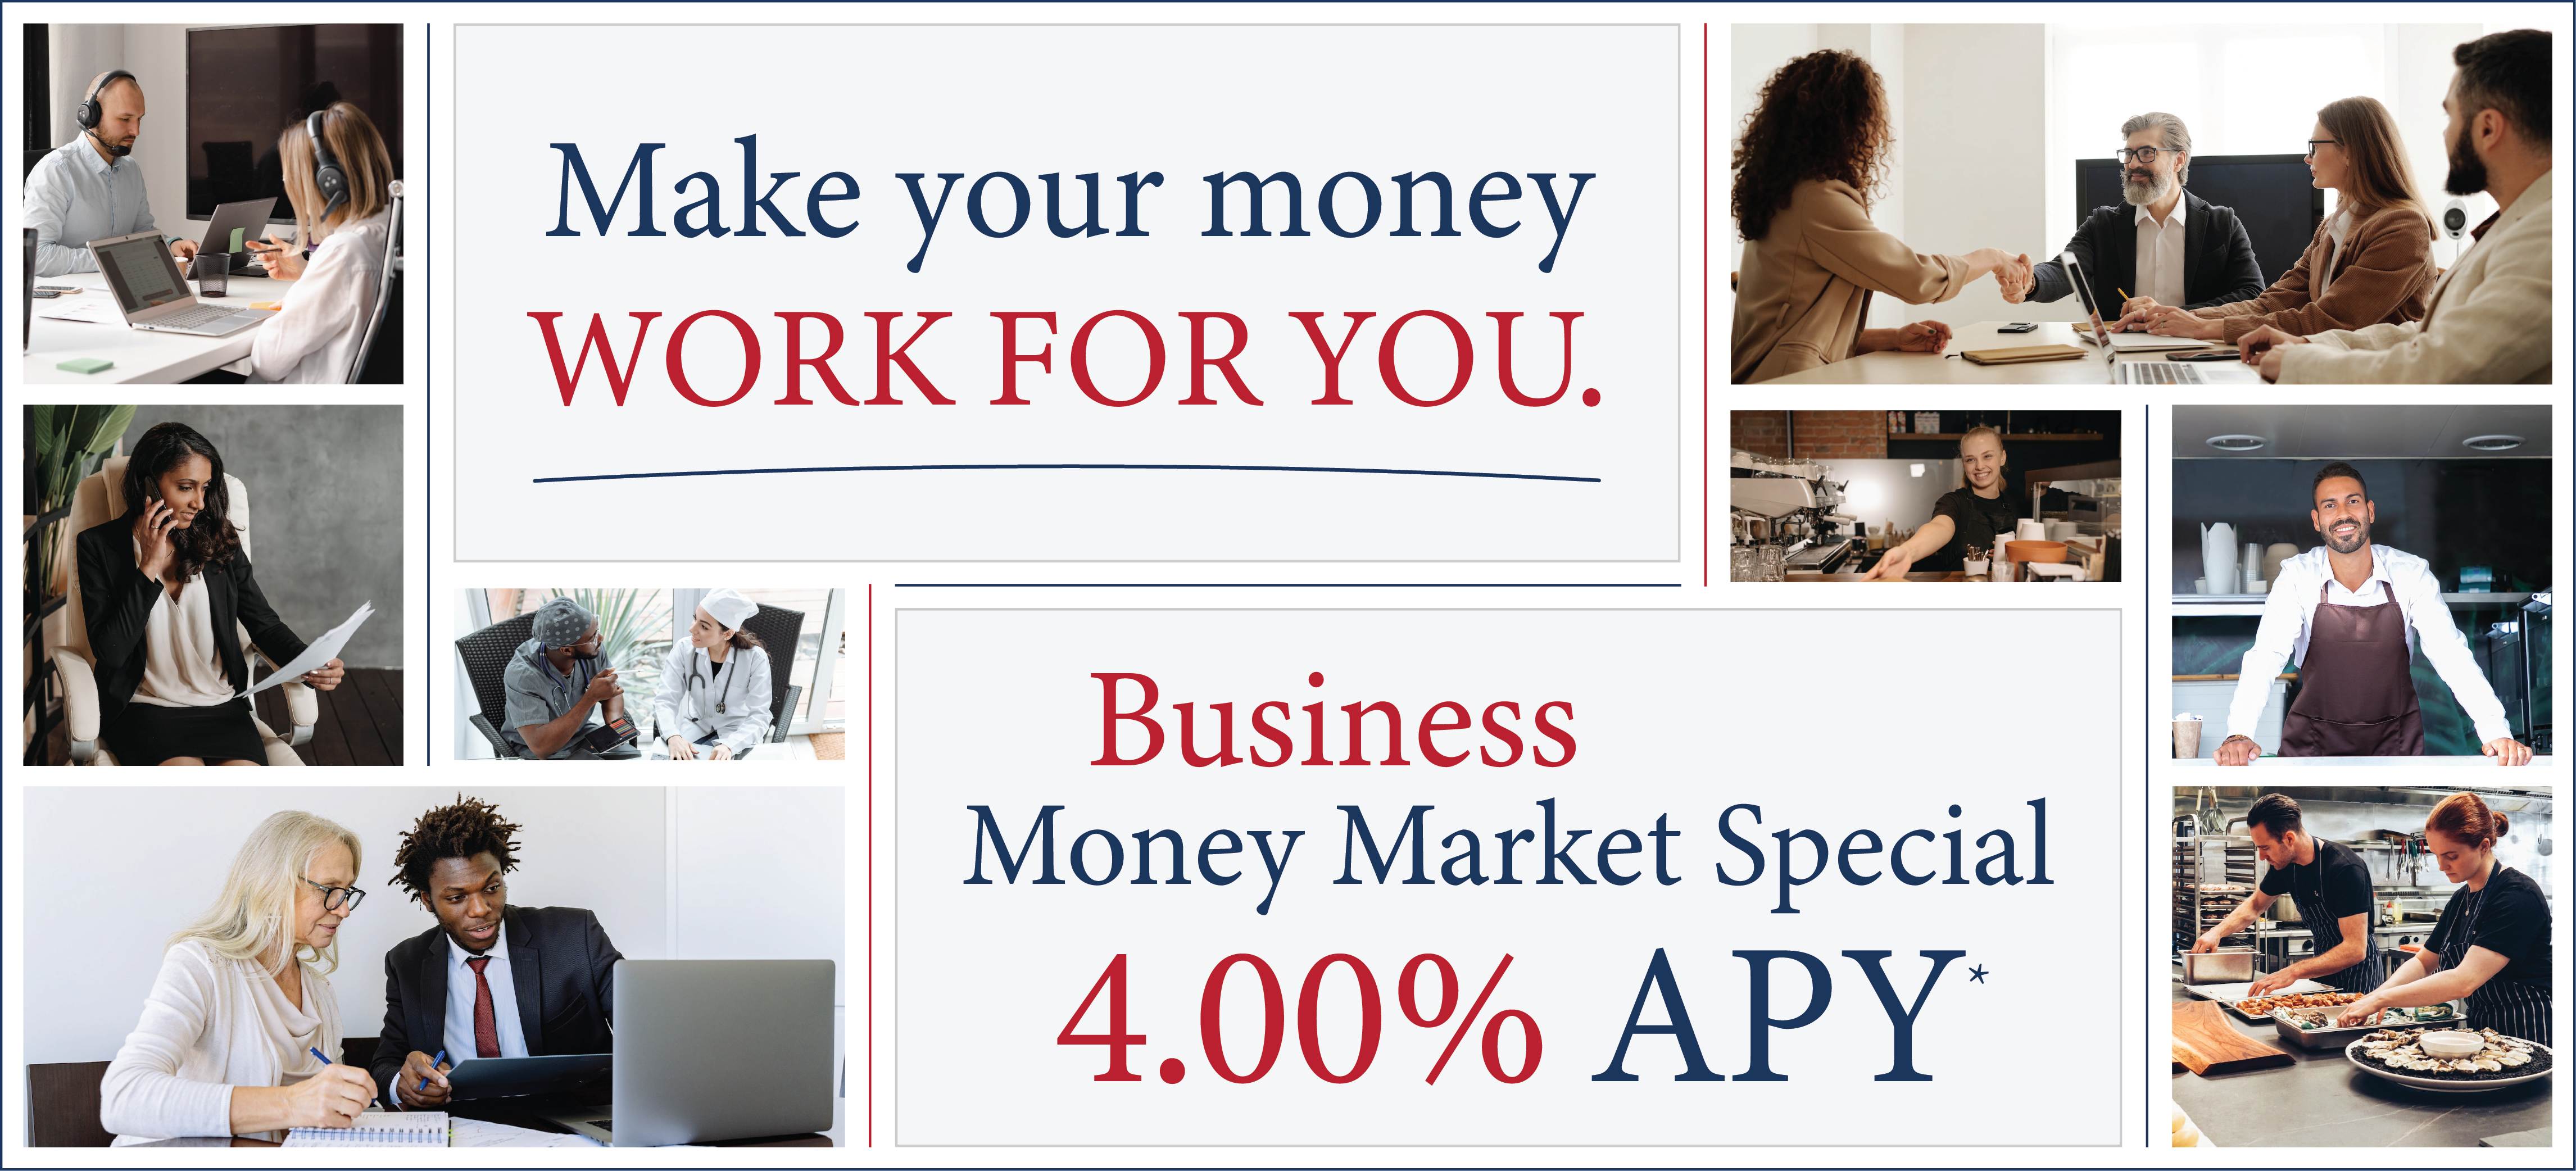 Business Money Market Special - 4.00%